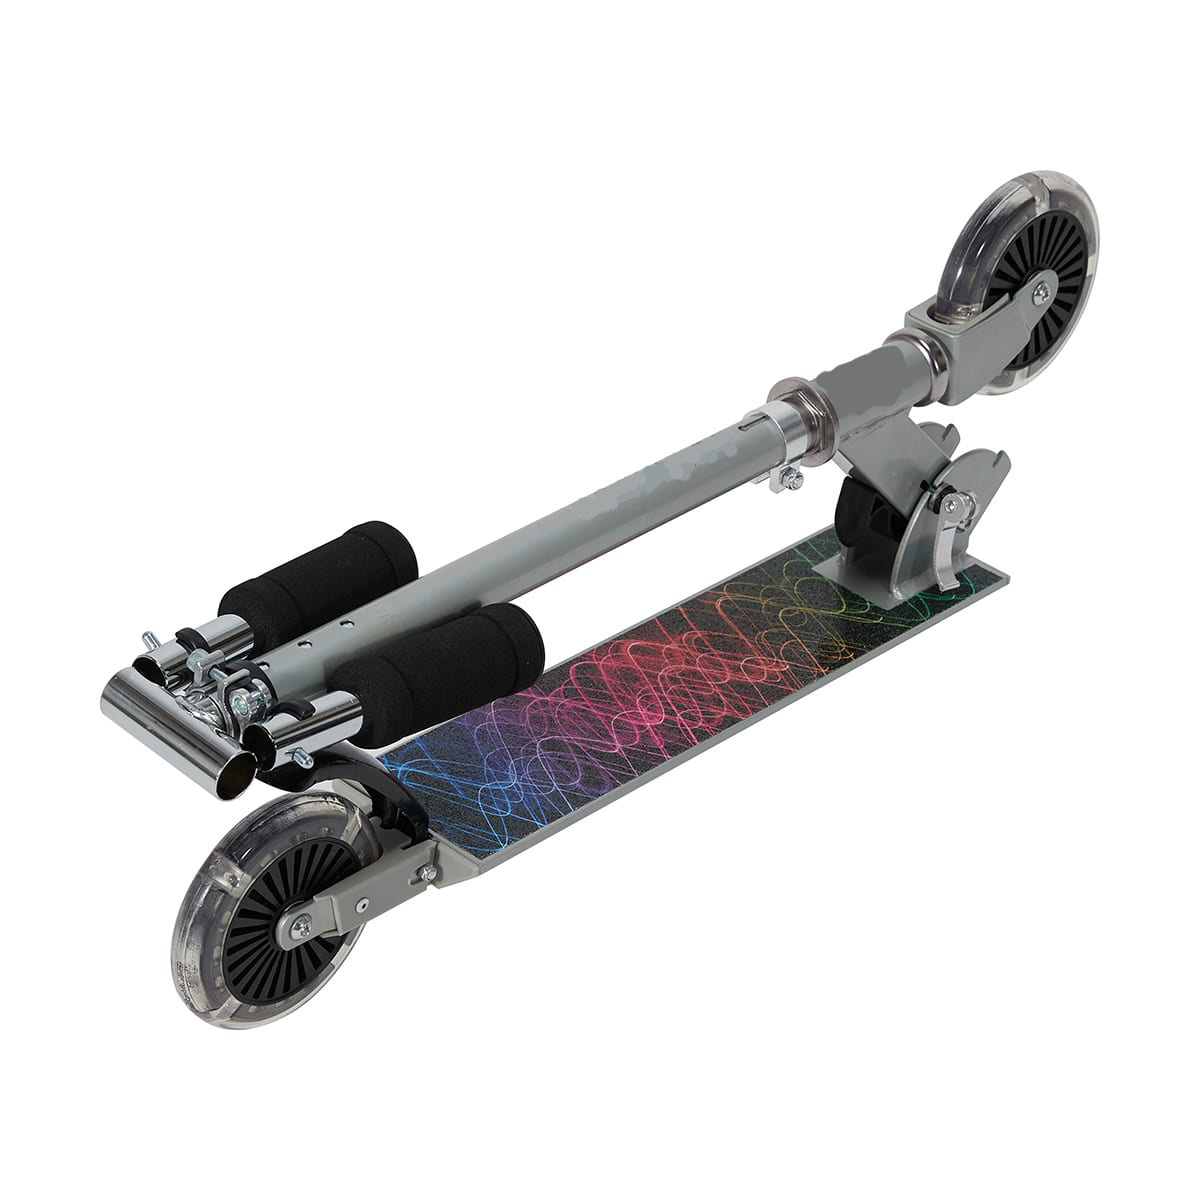 Lightup 2-Wheel Foldable&Adjustable Kick Scooter